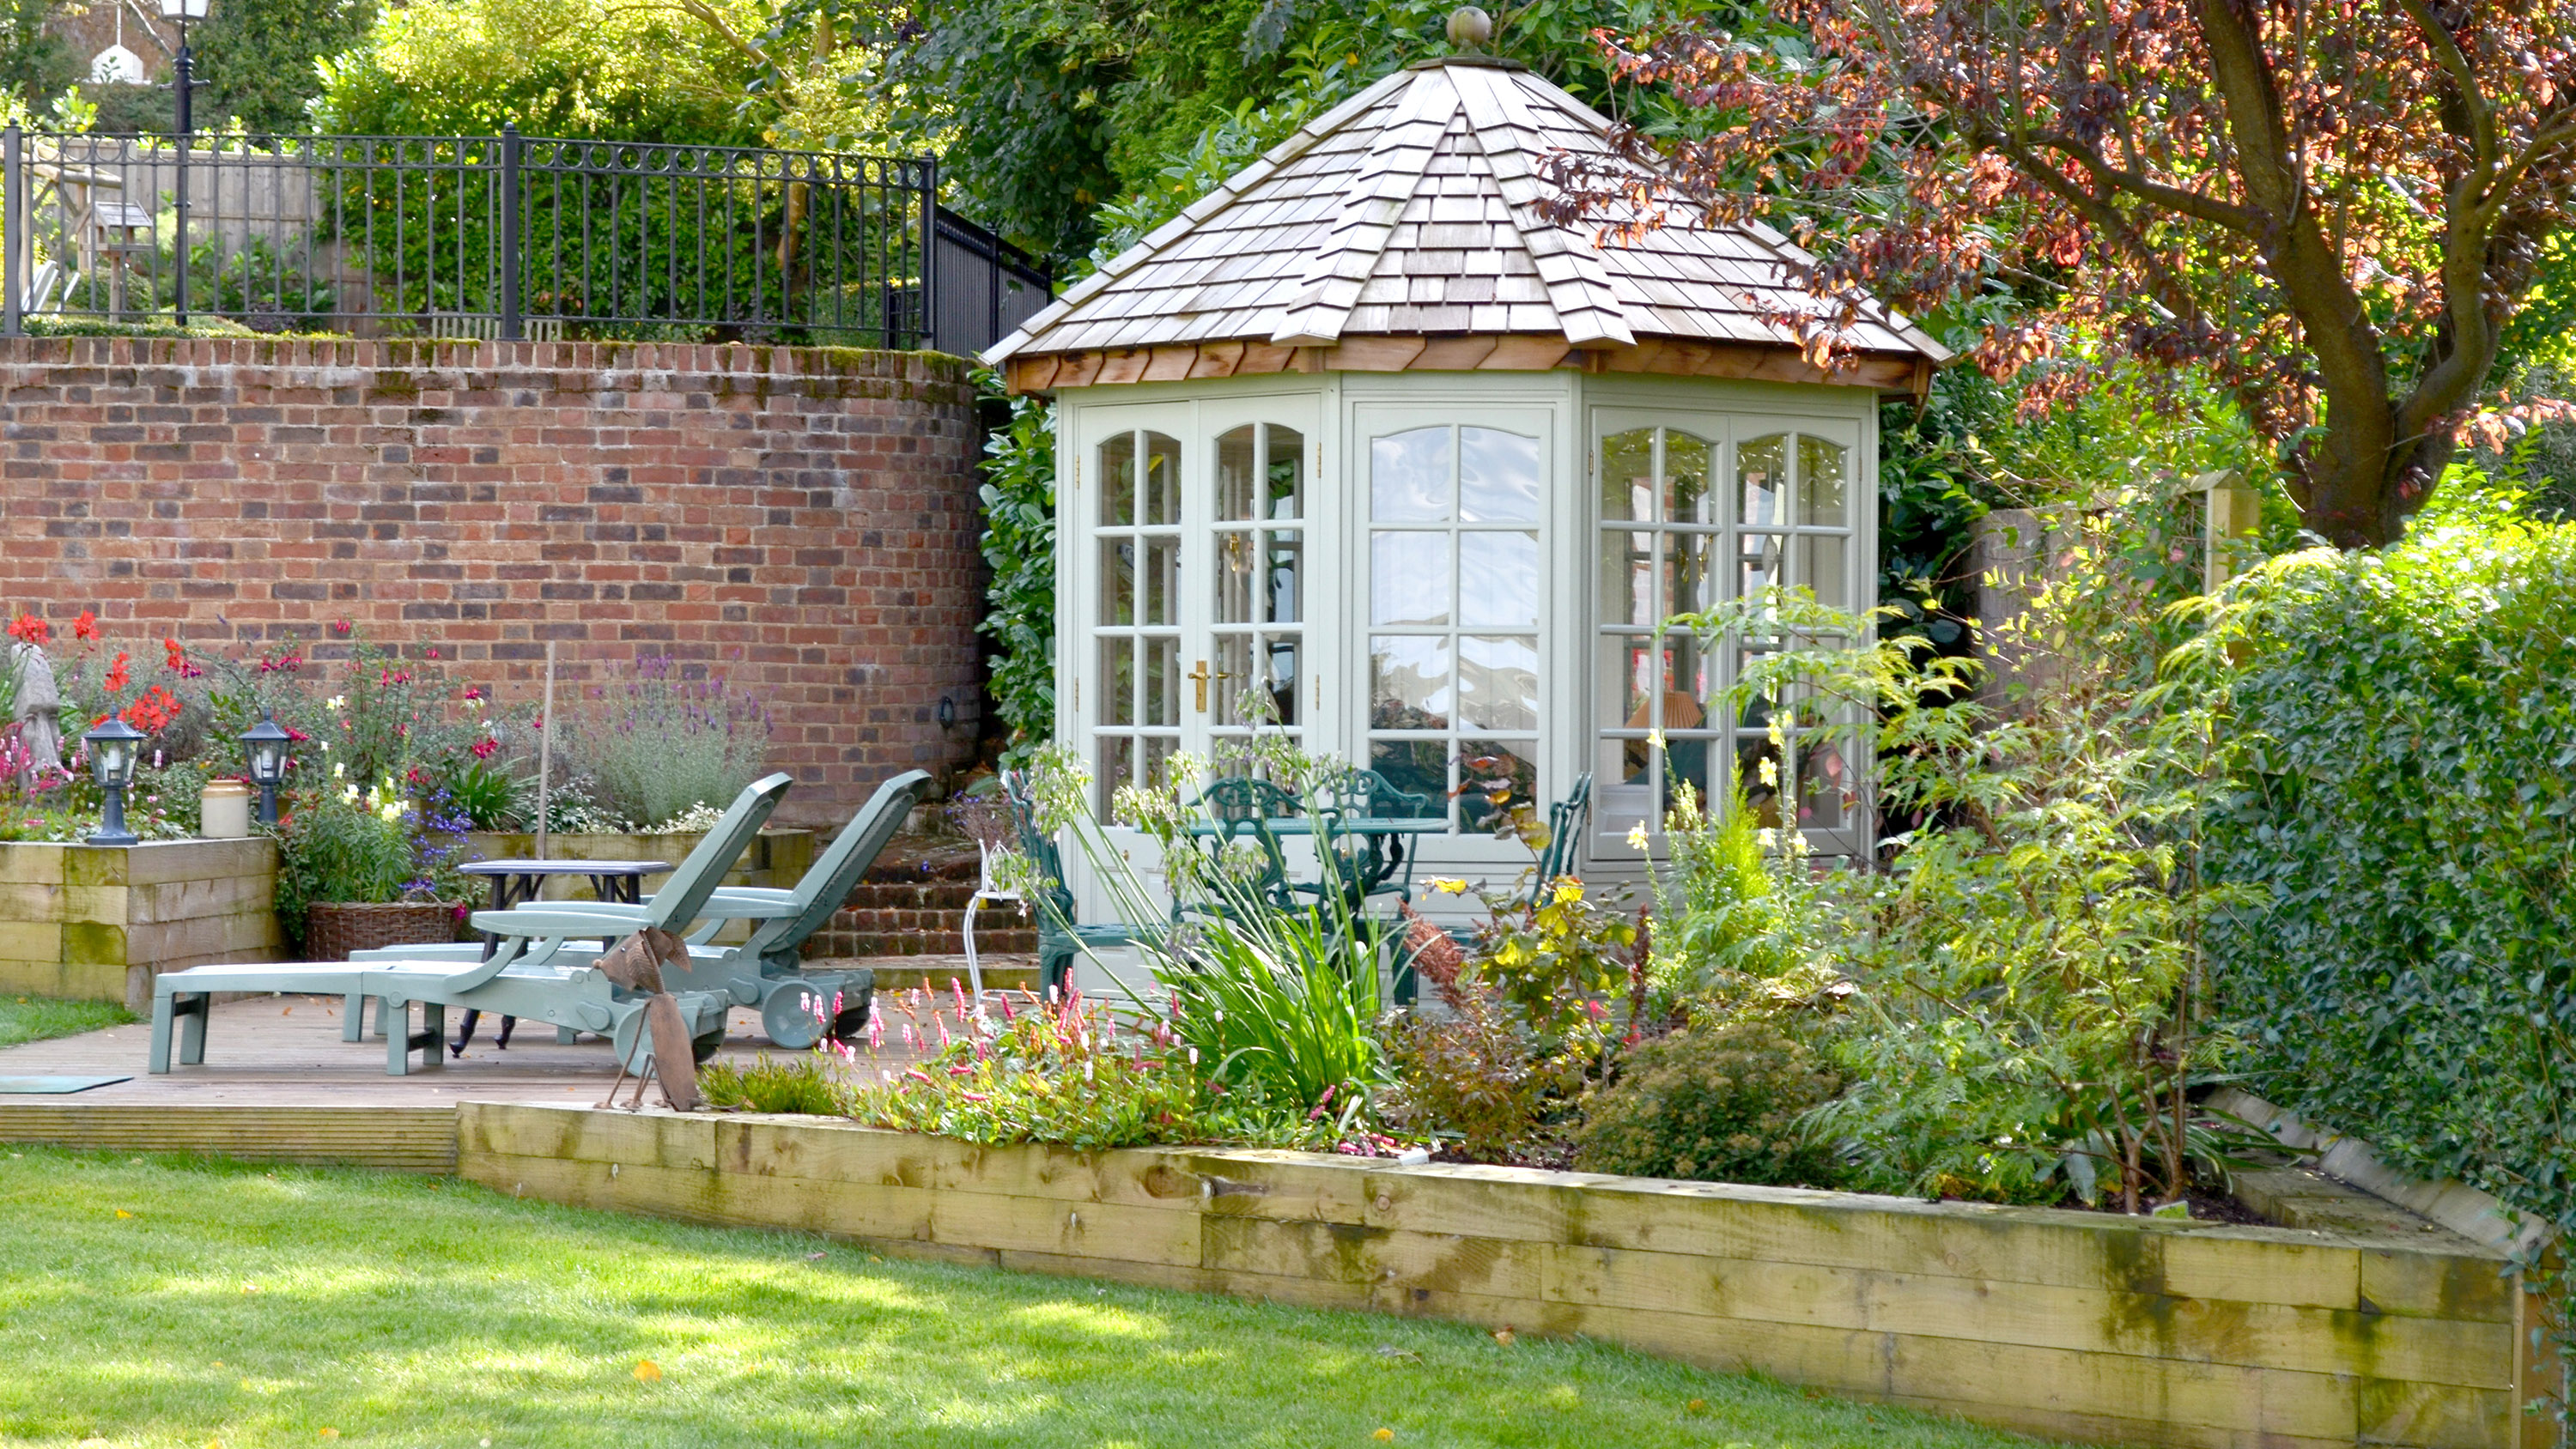 Summer house ideas 18 beautiful designs for relaxing garden rooms ...